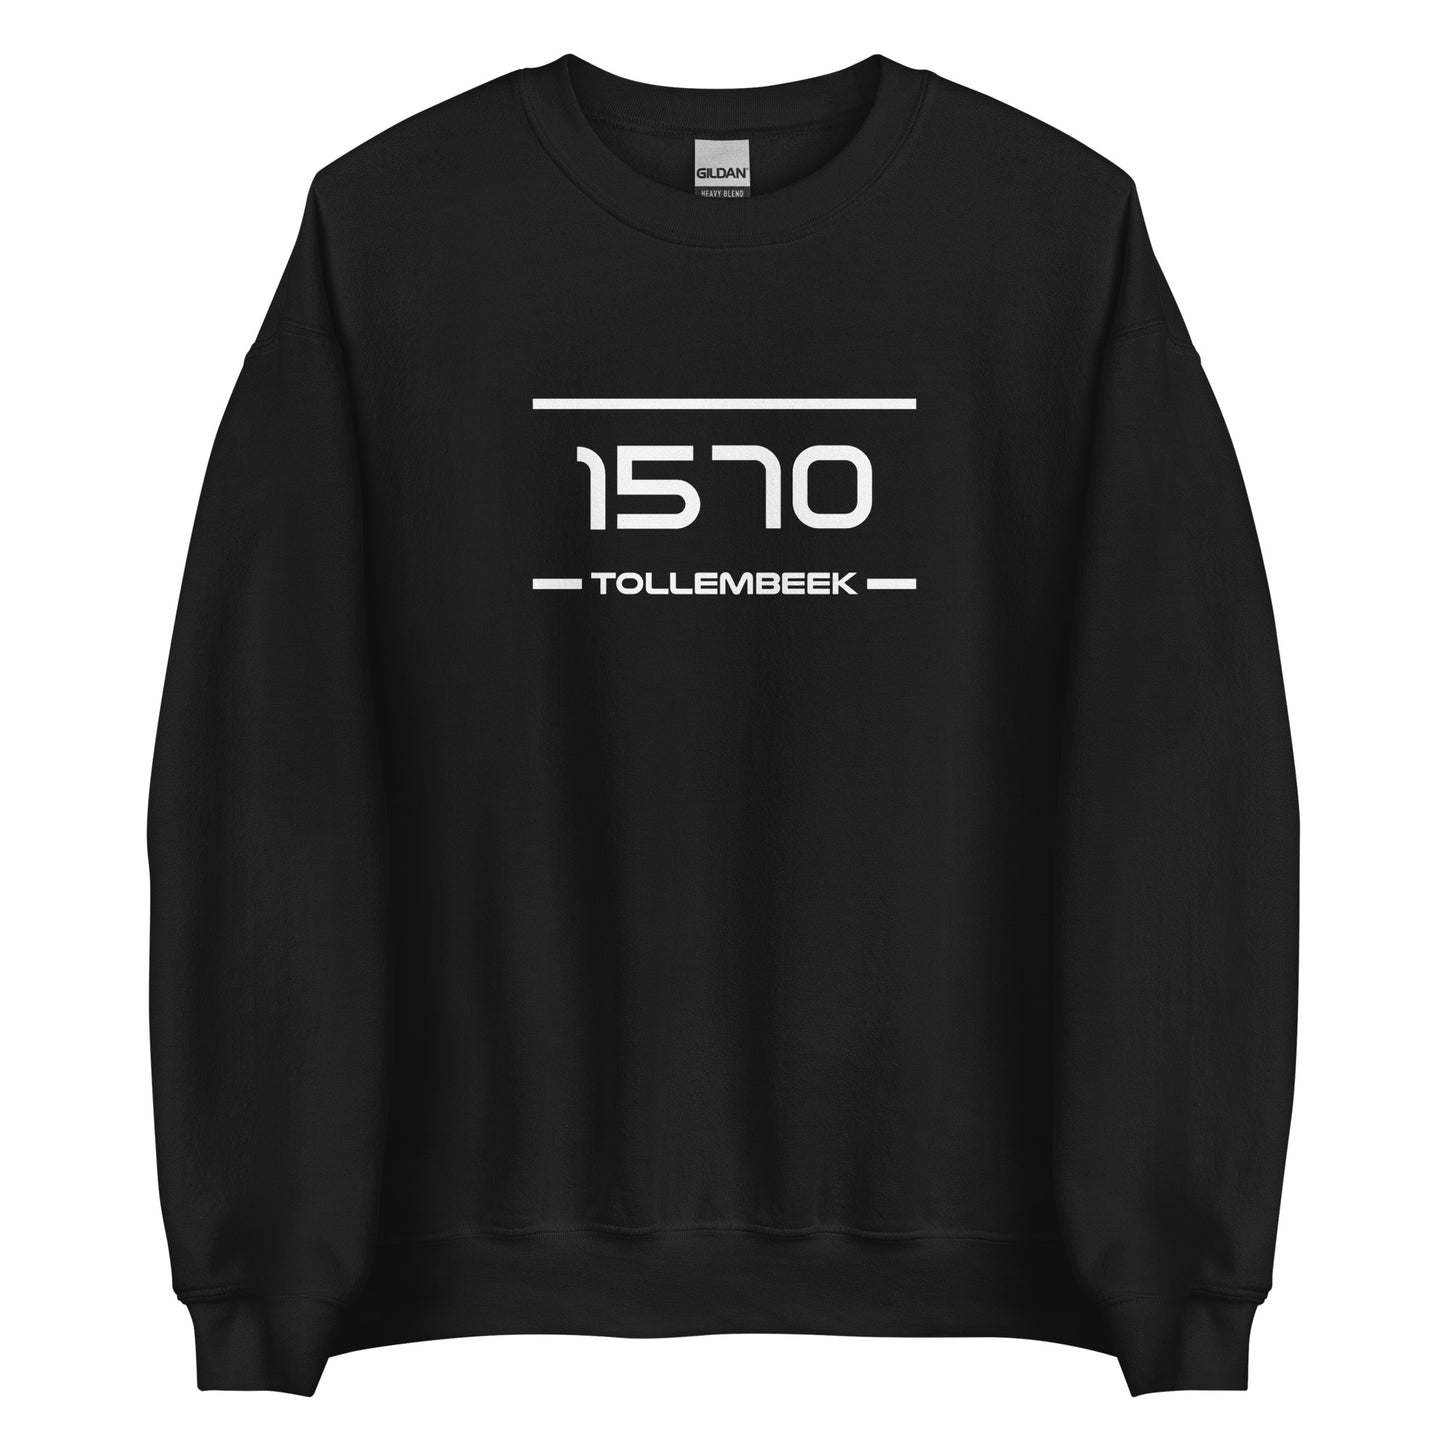 Sweater - 1570 - Tollembeek (M/V)